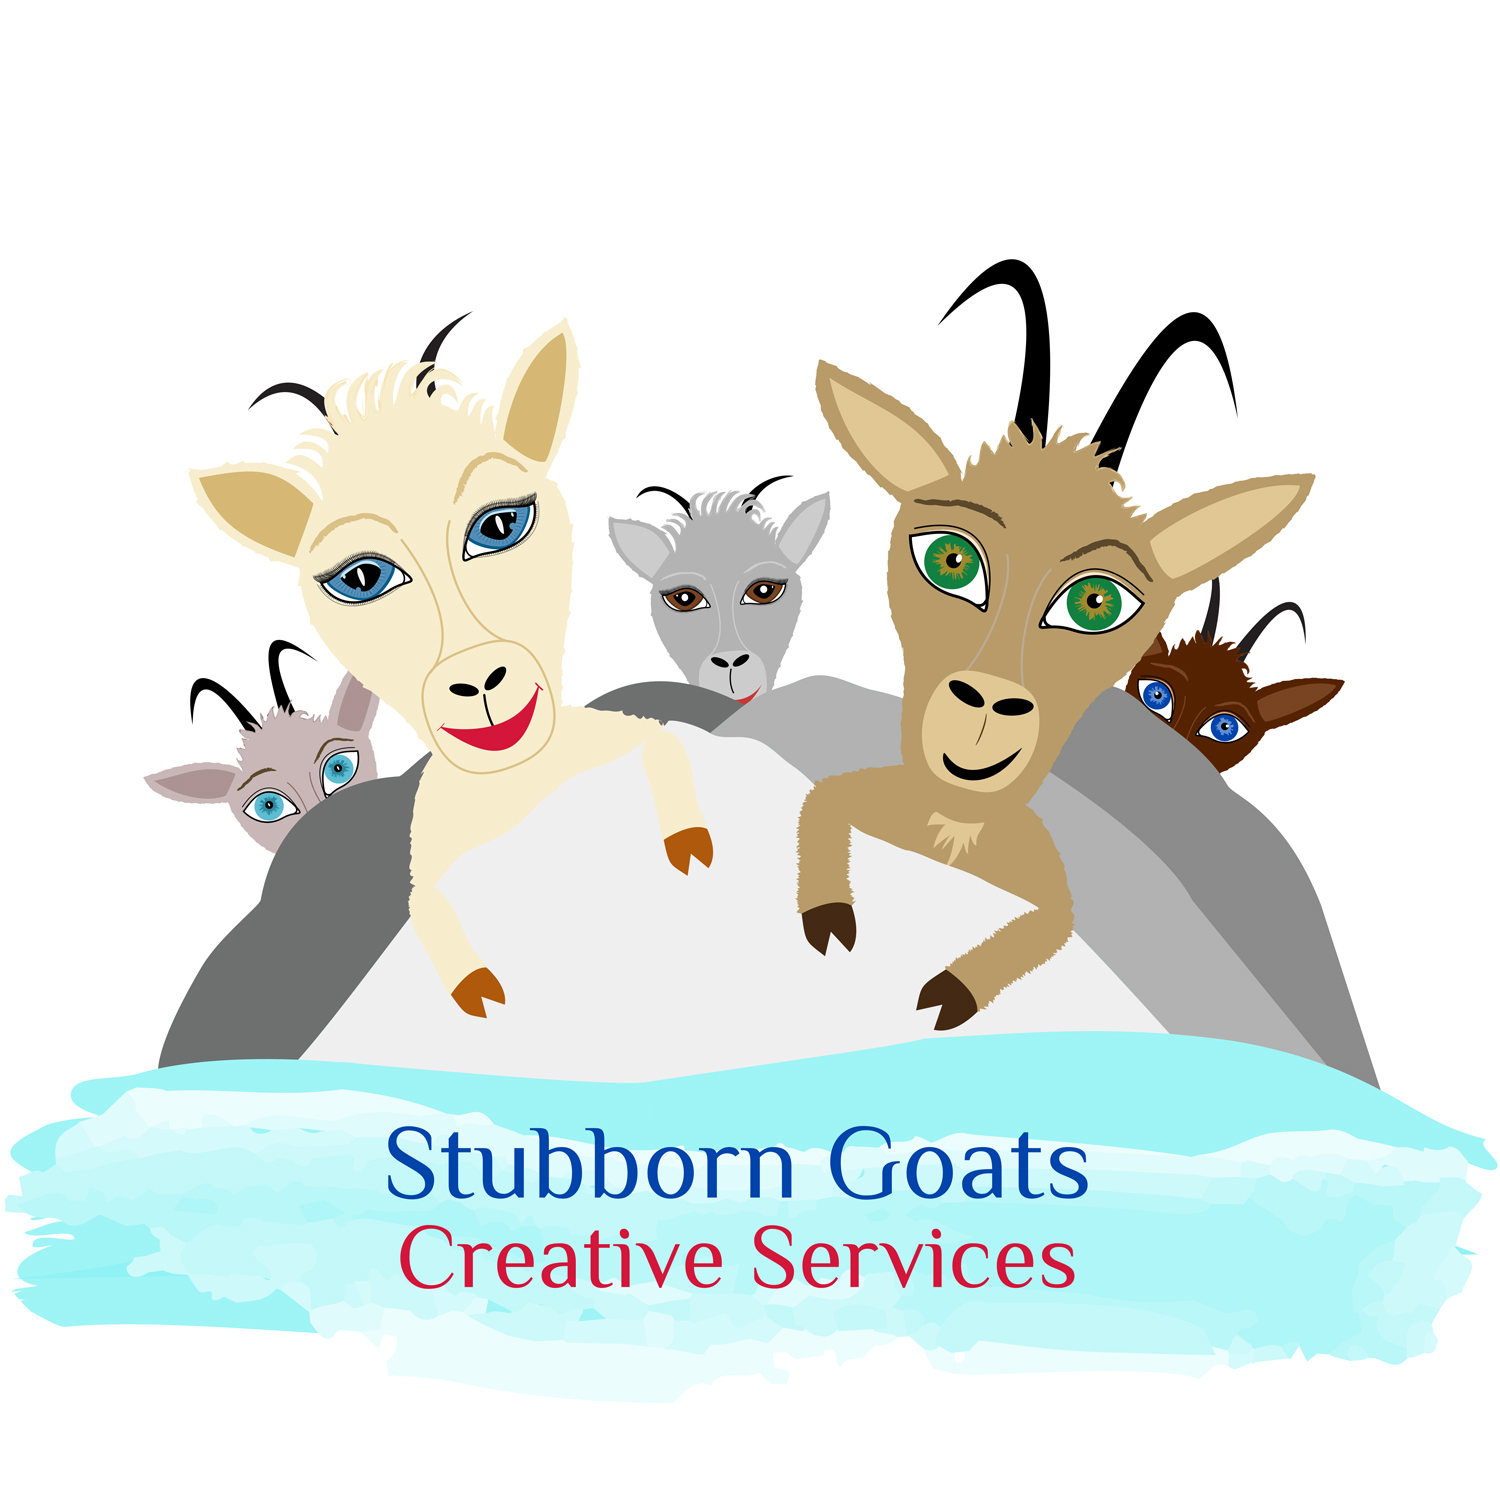 Stubborn Goats Creative Services